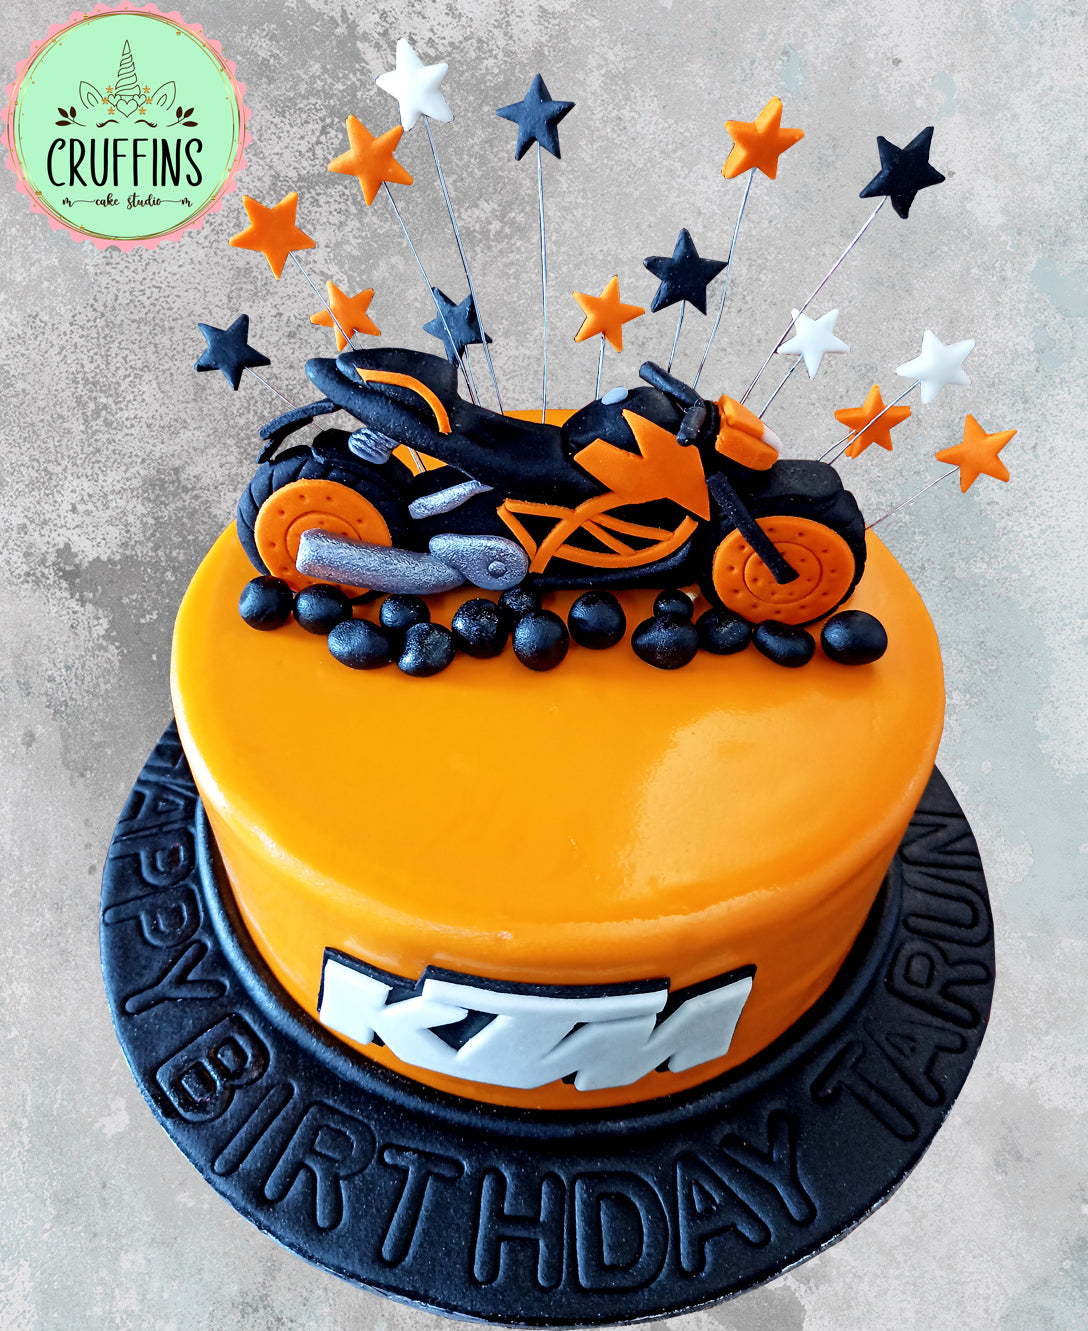 Motocross Birthday Cake - Eating Gluten and Dairy Free